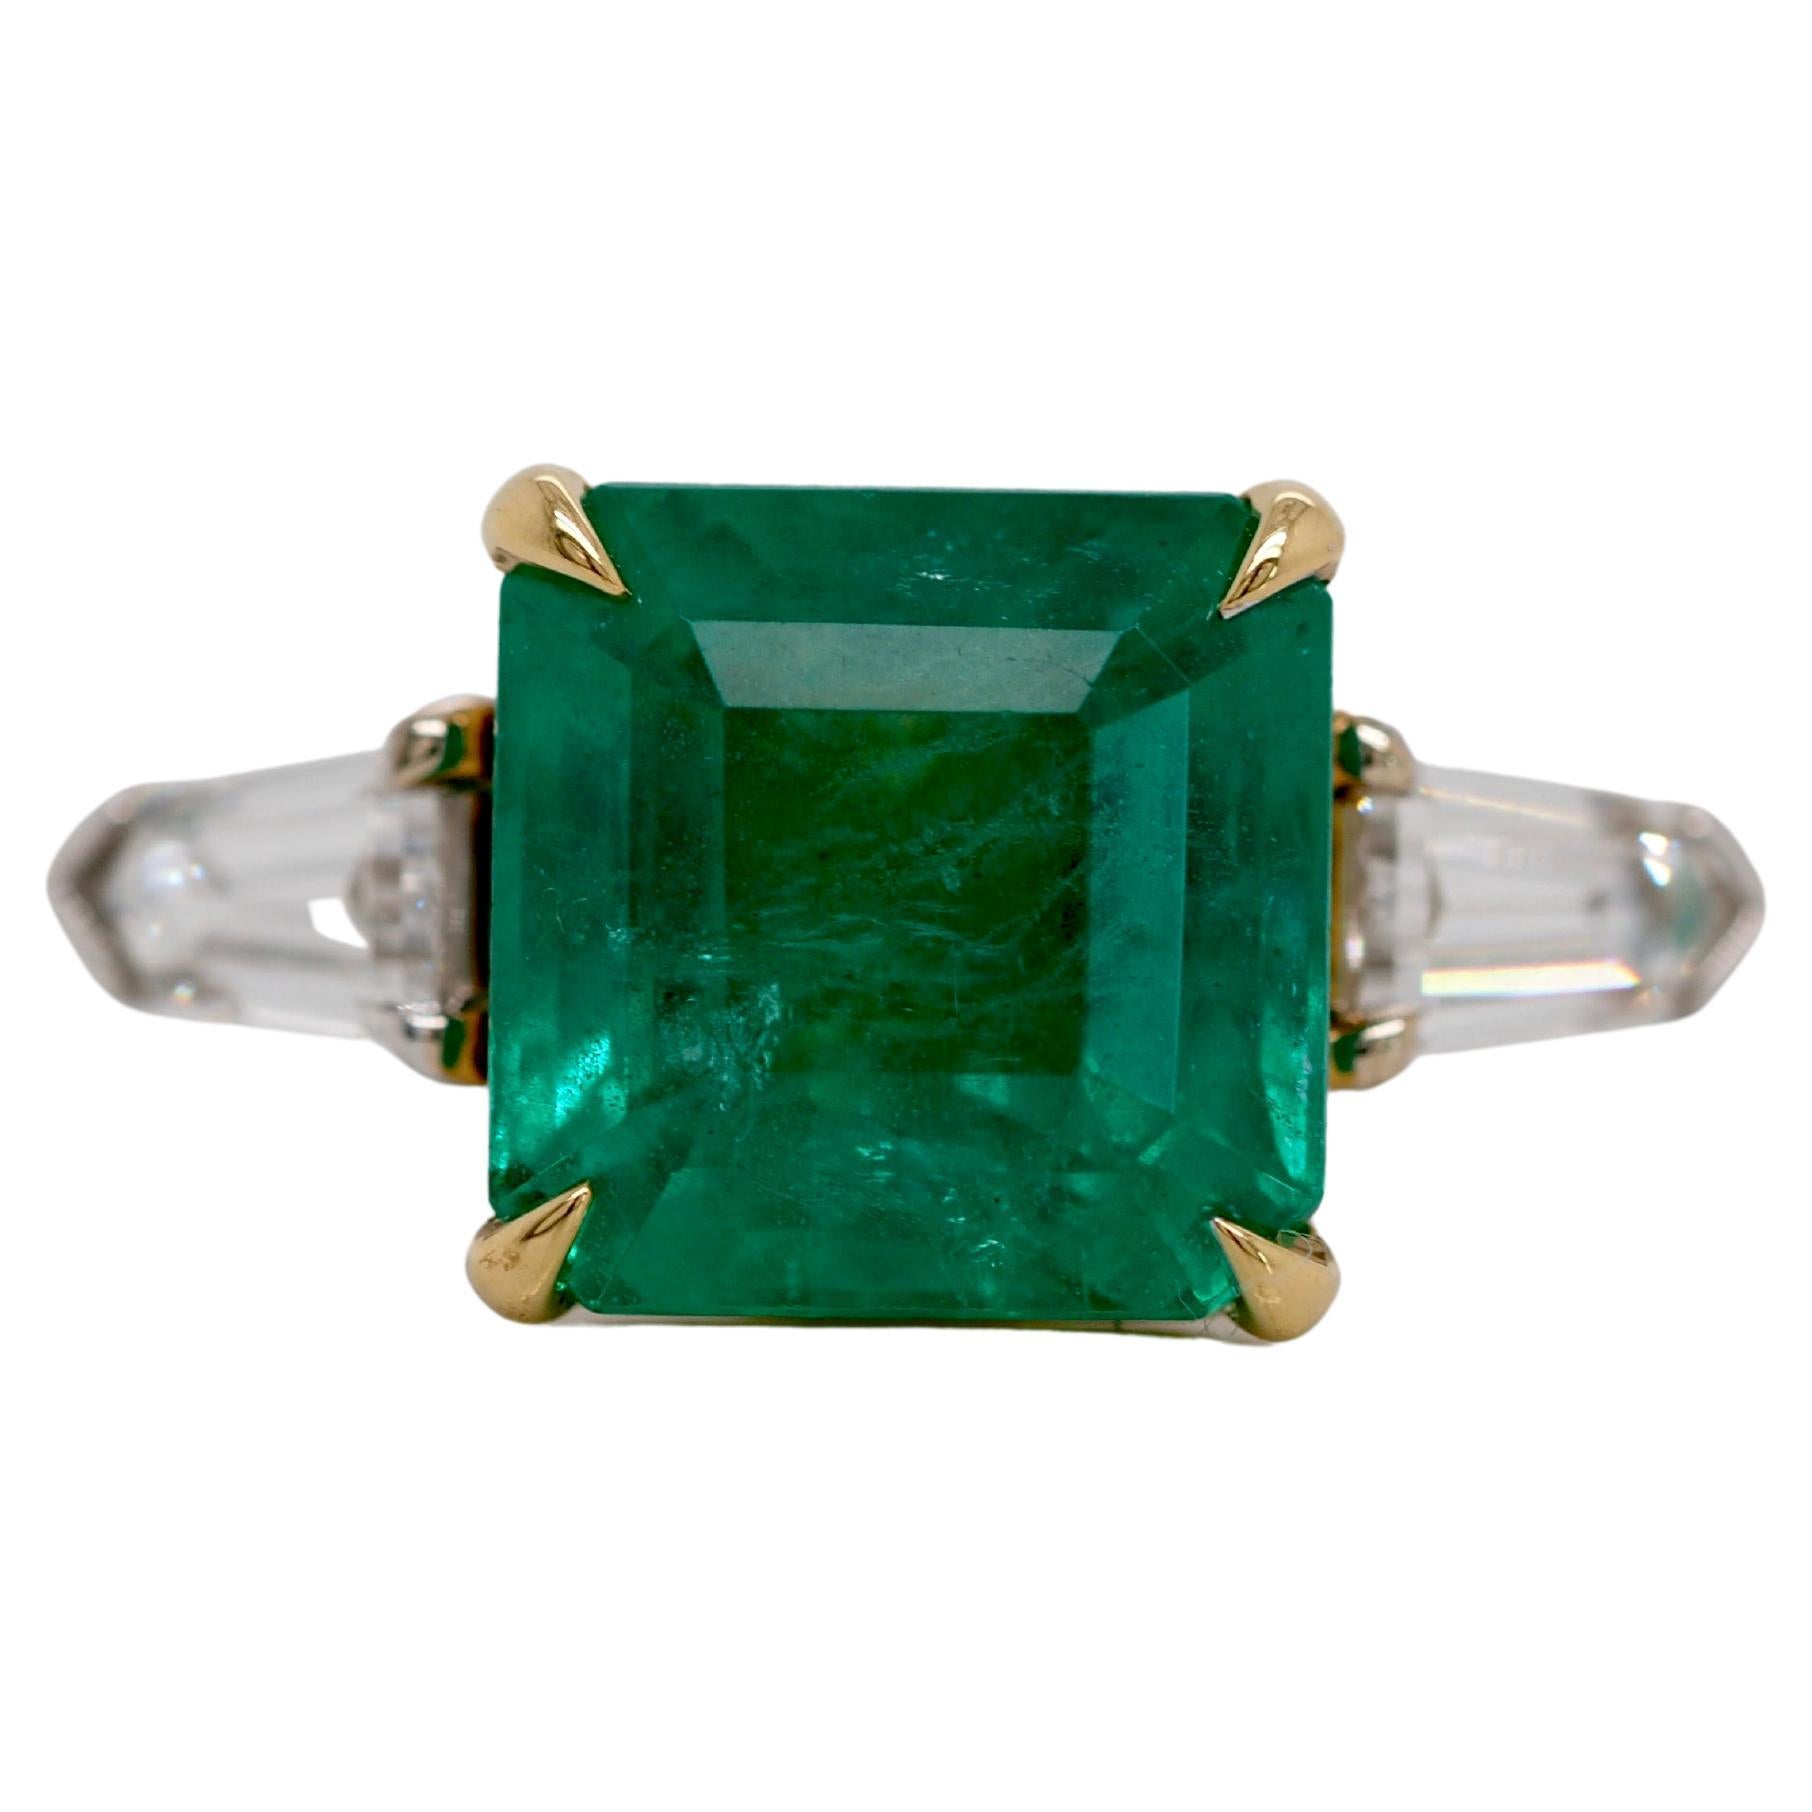 AIGS Certified Zambia Emerald Diamond Ring in 18 Karat White Gold